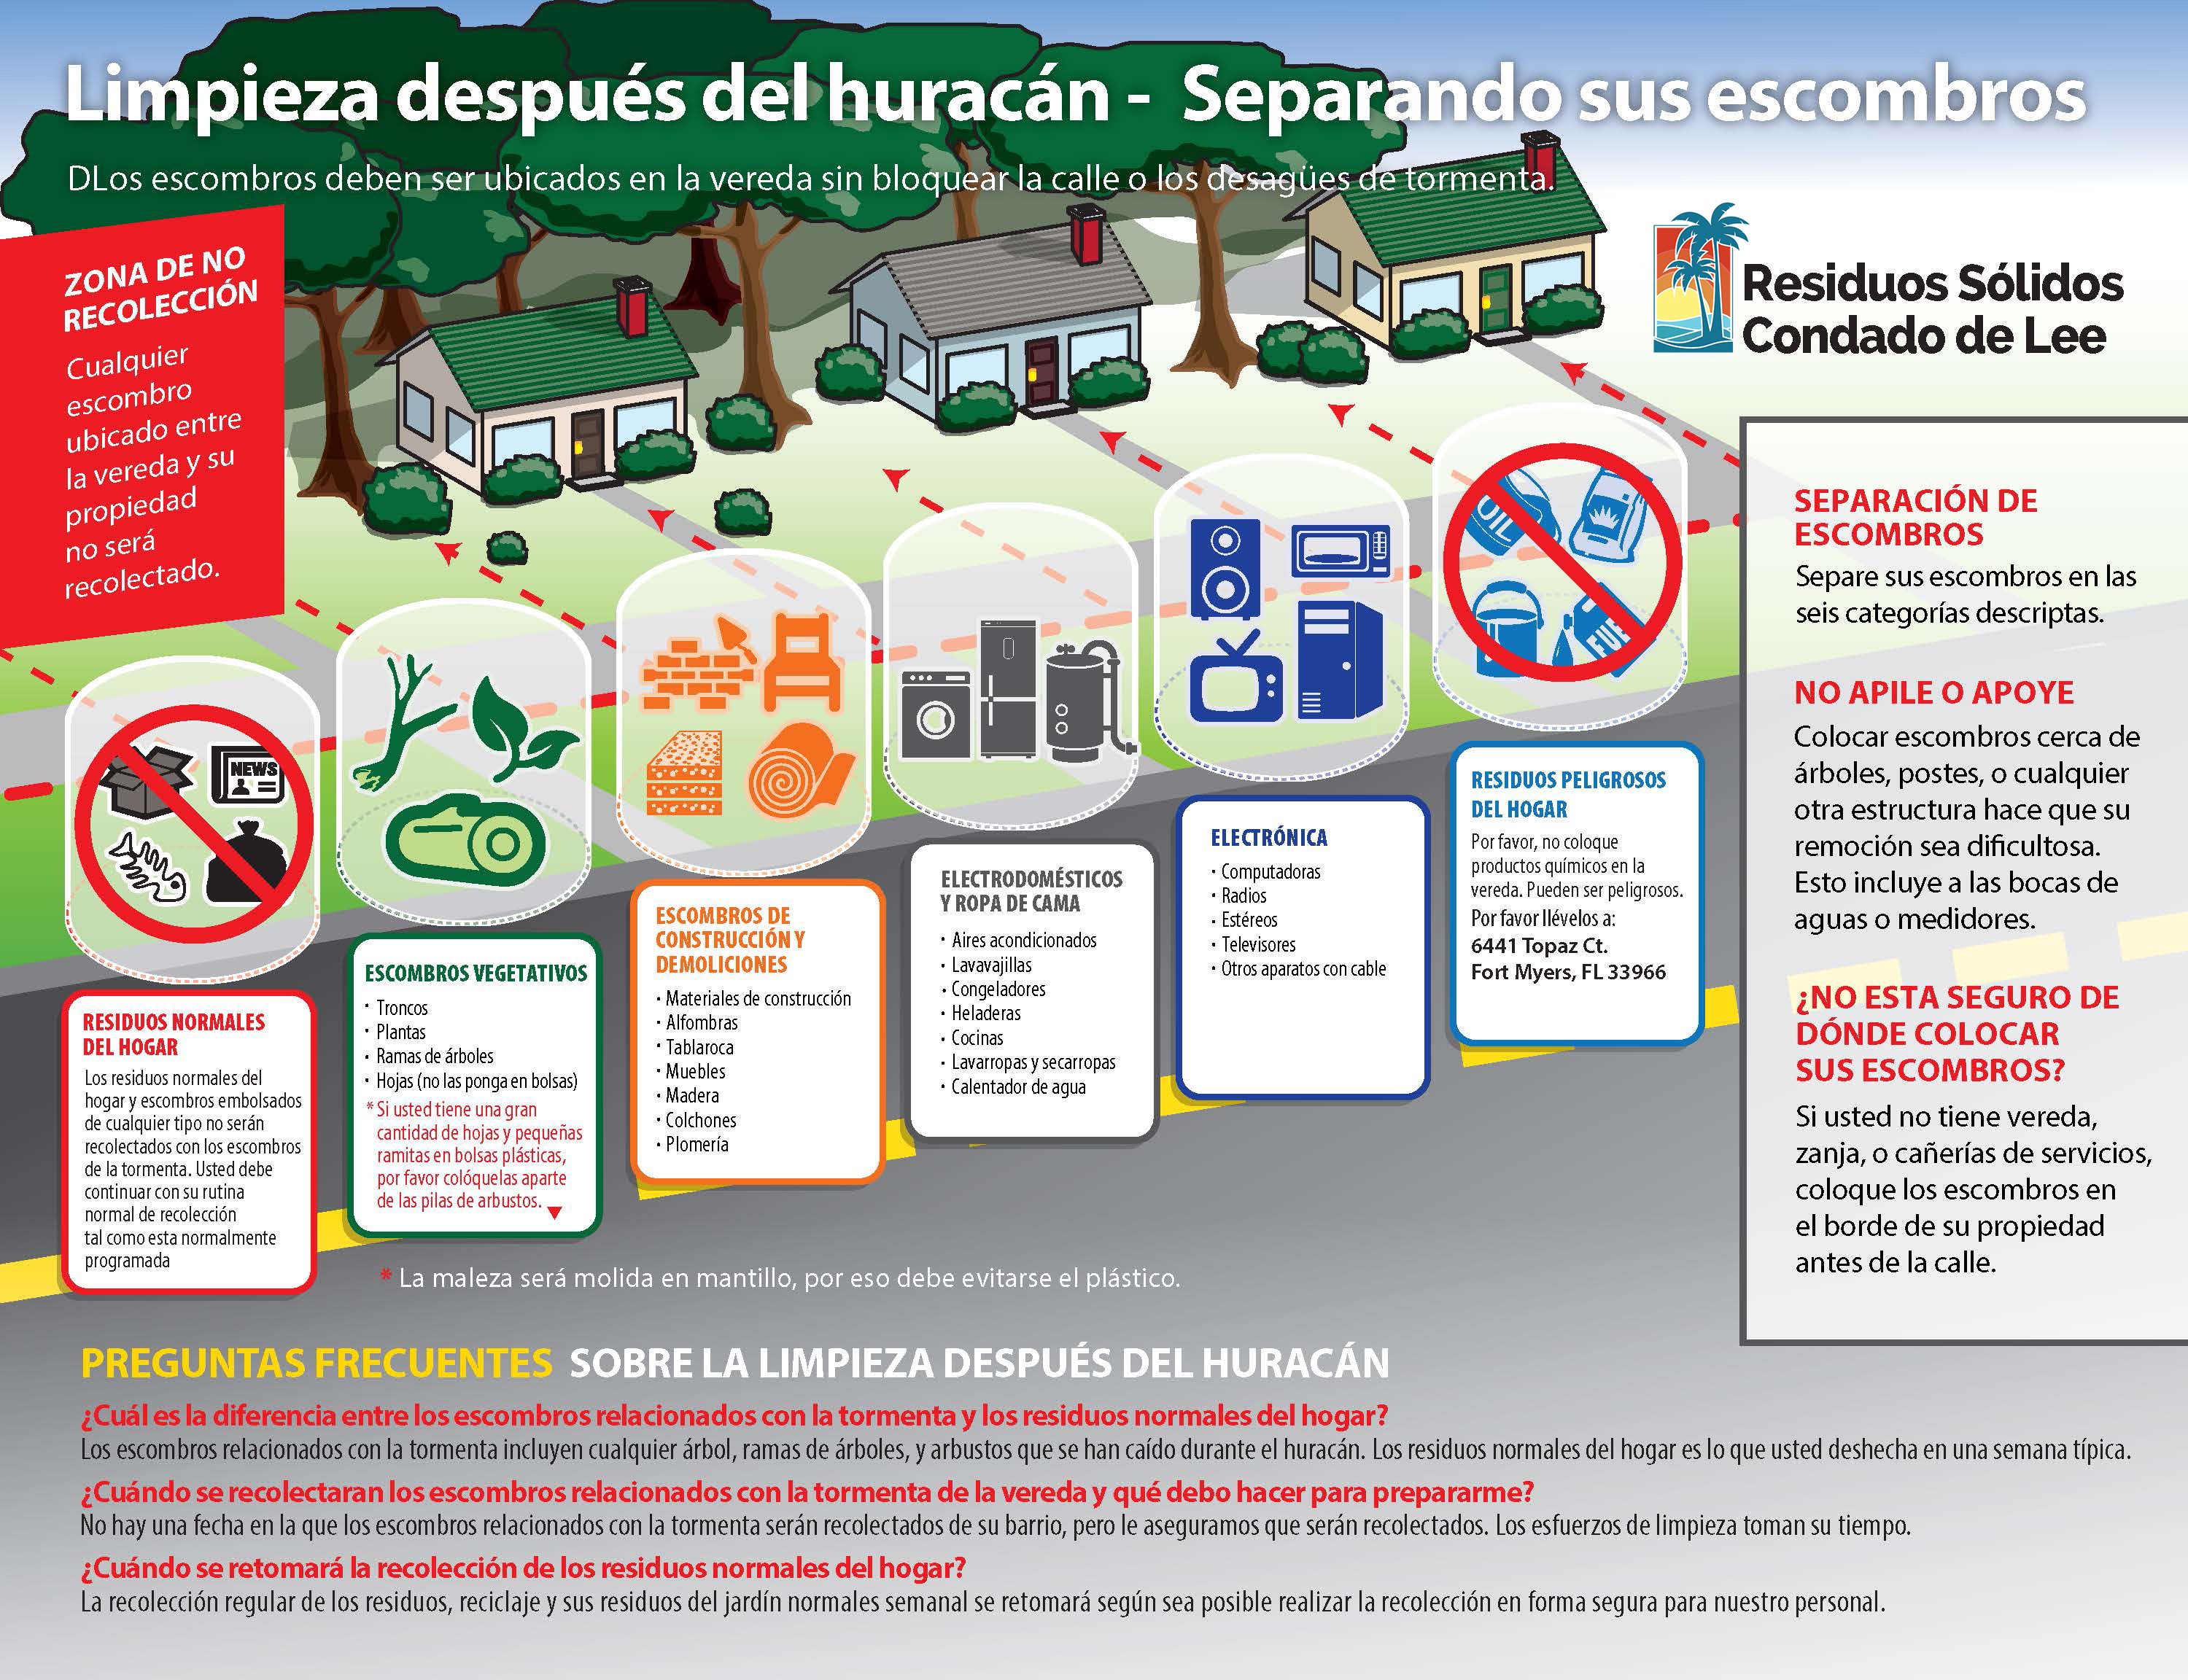 LCSW_Hurricane_CleanUp_WEBad SPANISH.jpg